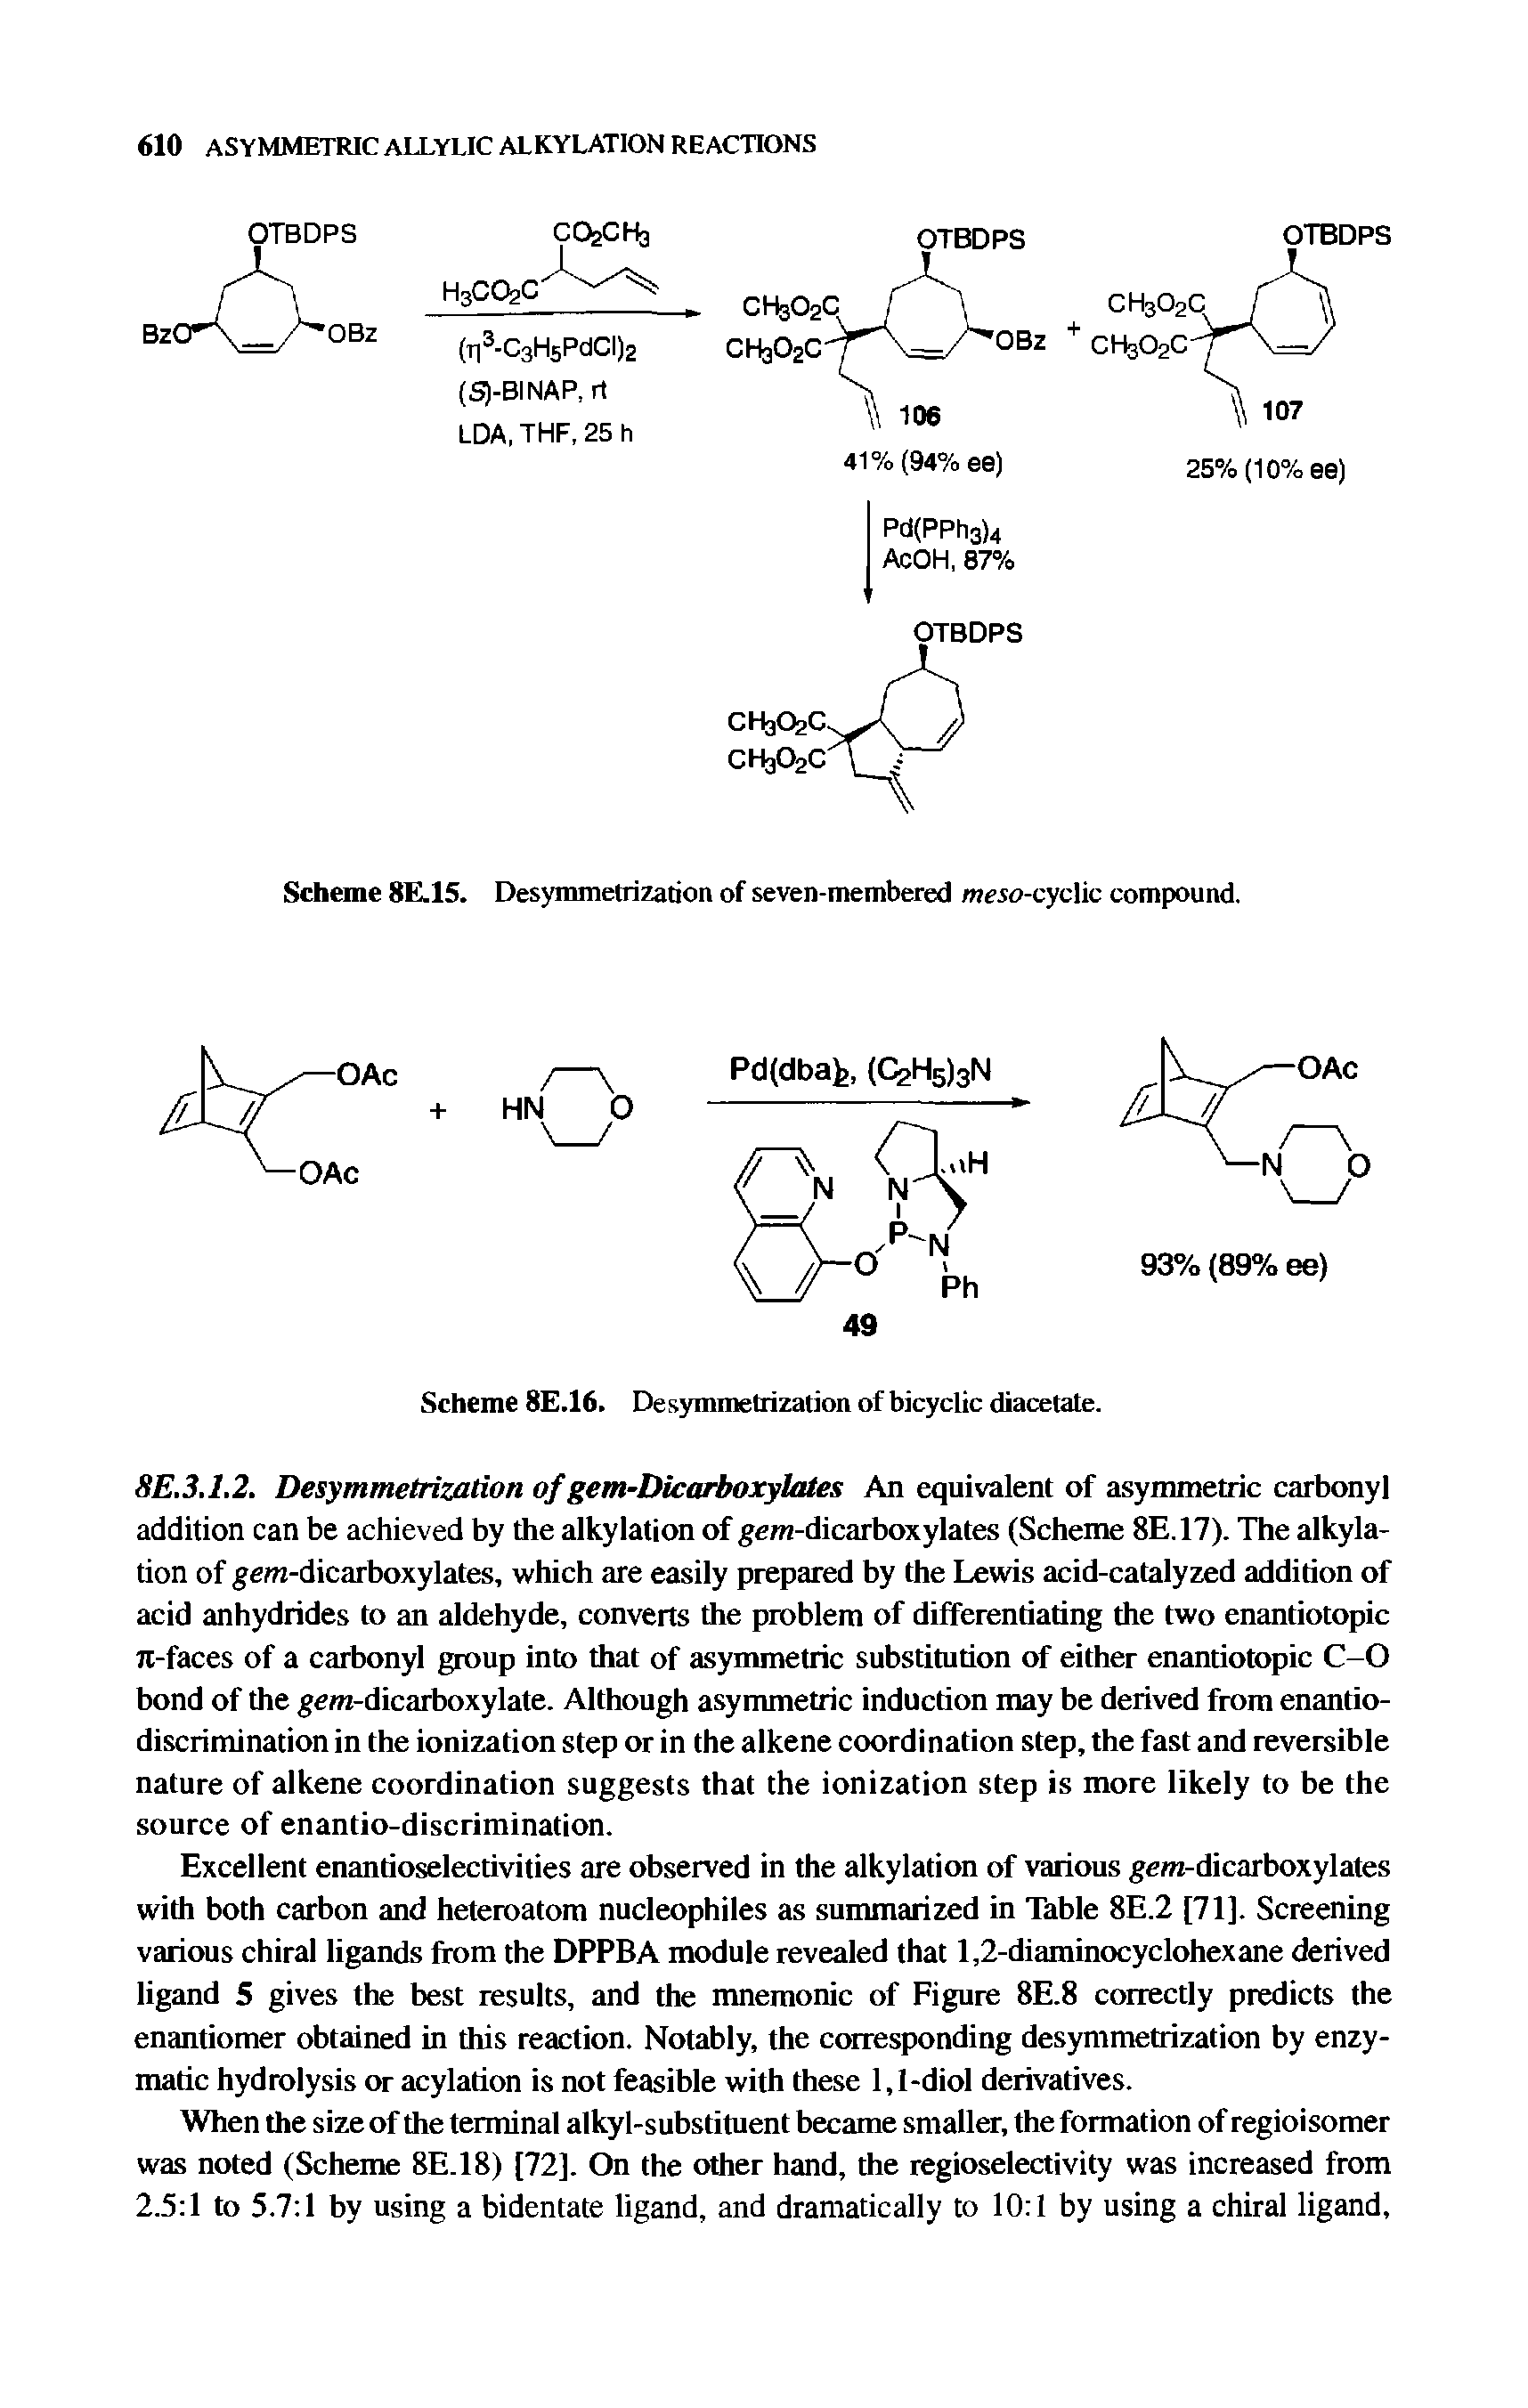 Scheme 8E.15. Desymmetrization of seven-membered meso-cyclic compound.